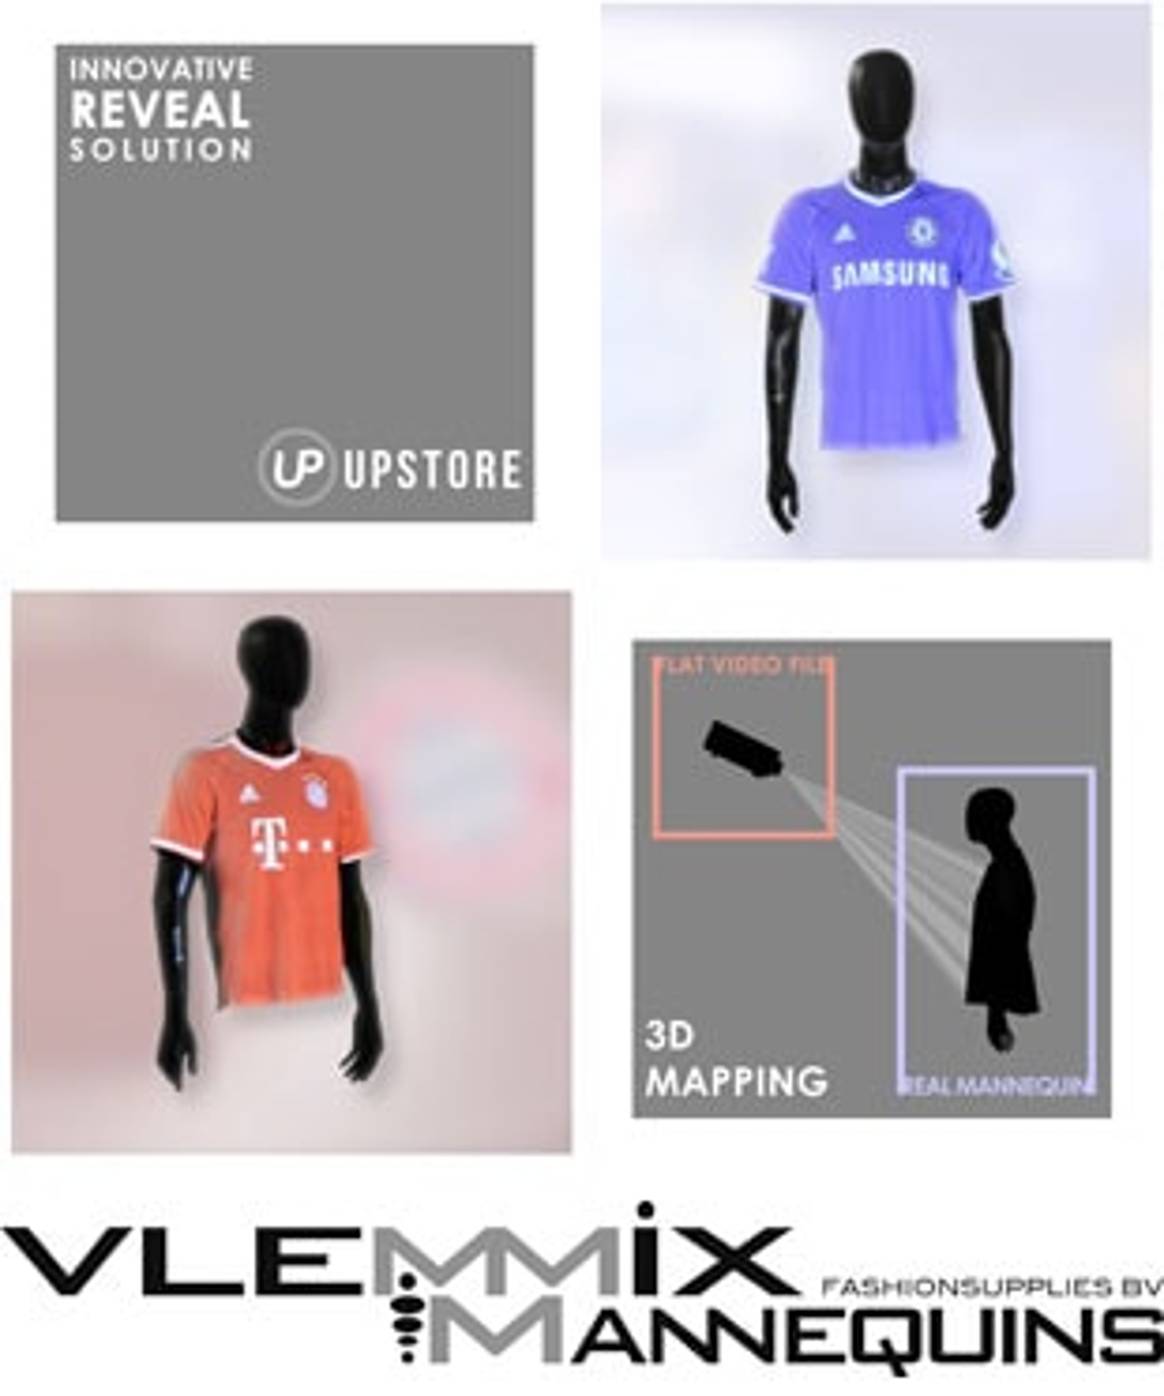 Vlemmix Mannequins & Fashionsupplies introduceert 3-dimensionale kledingpresentatie